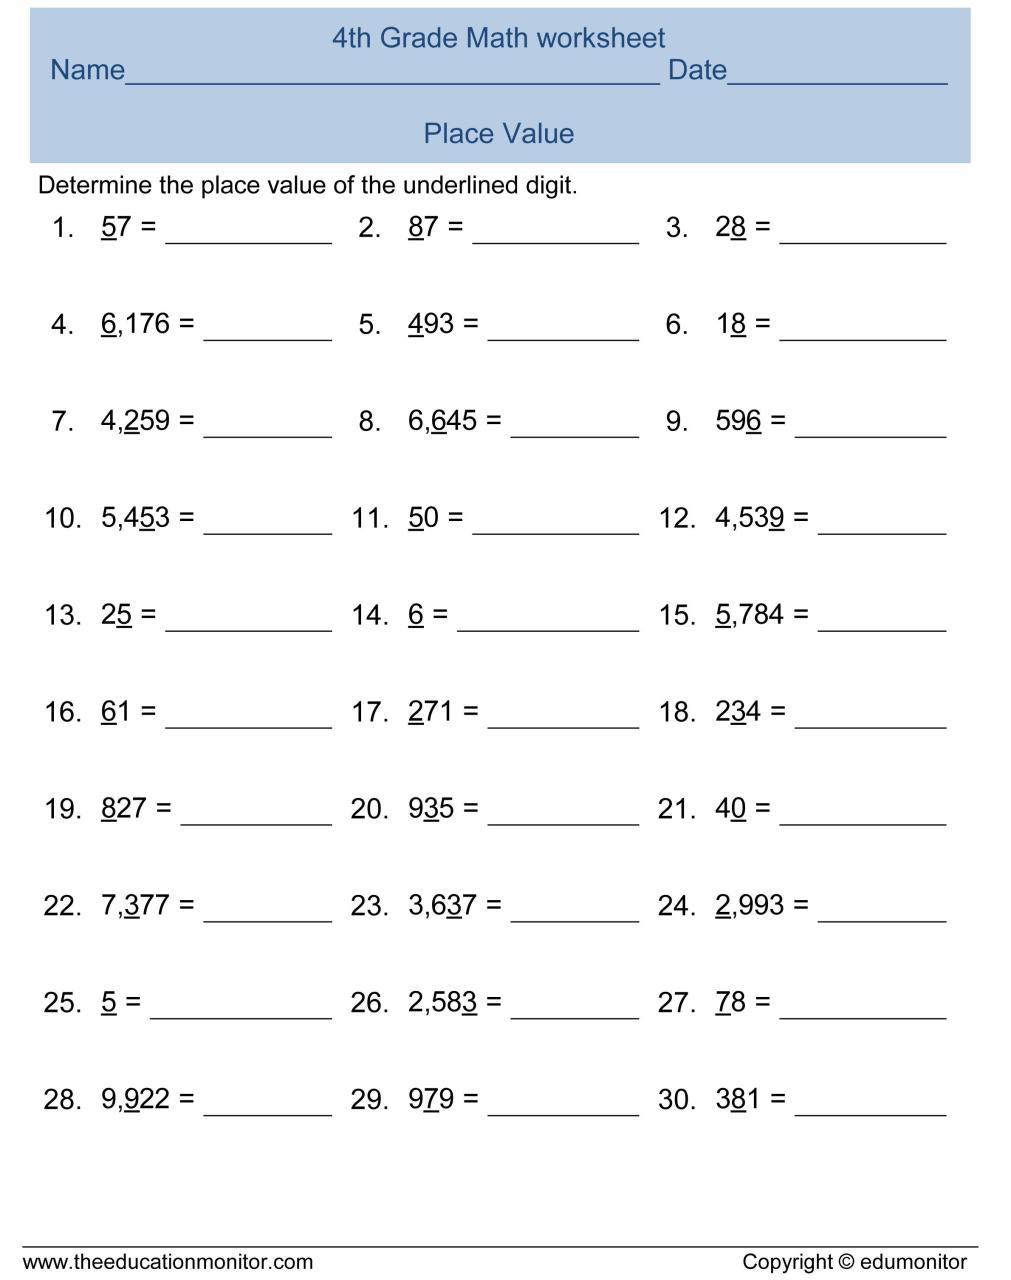 4th Grade EduMonitor Free printable math worksheets, 4th grade math